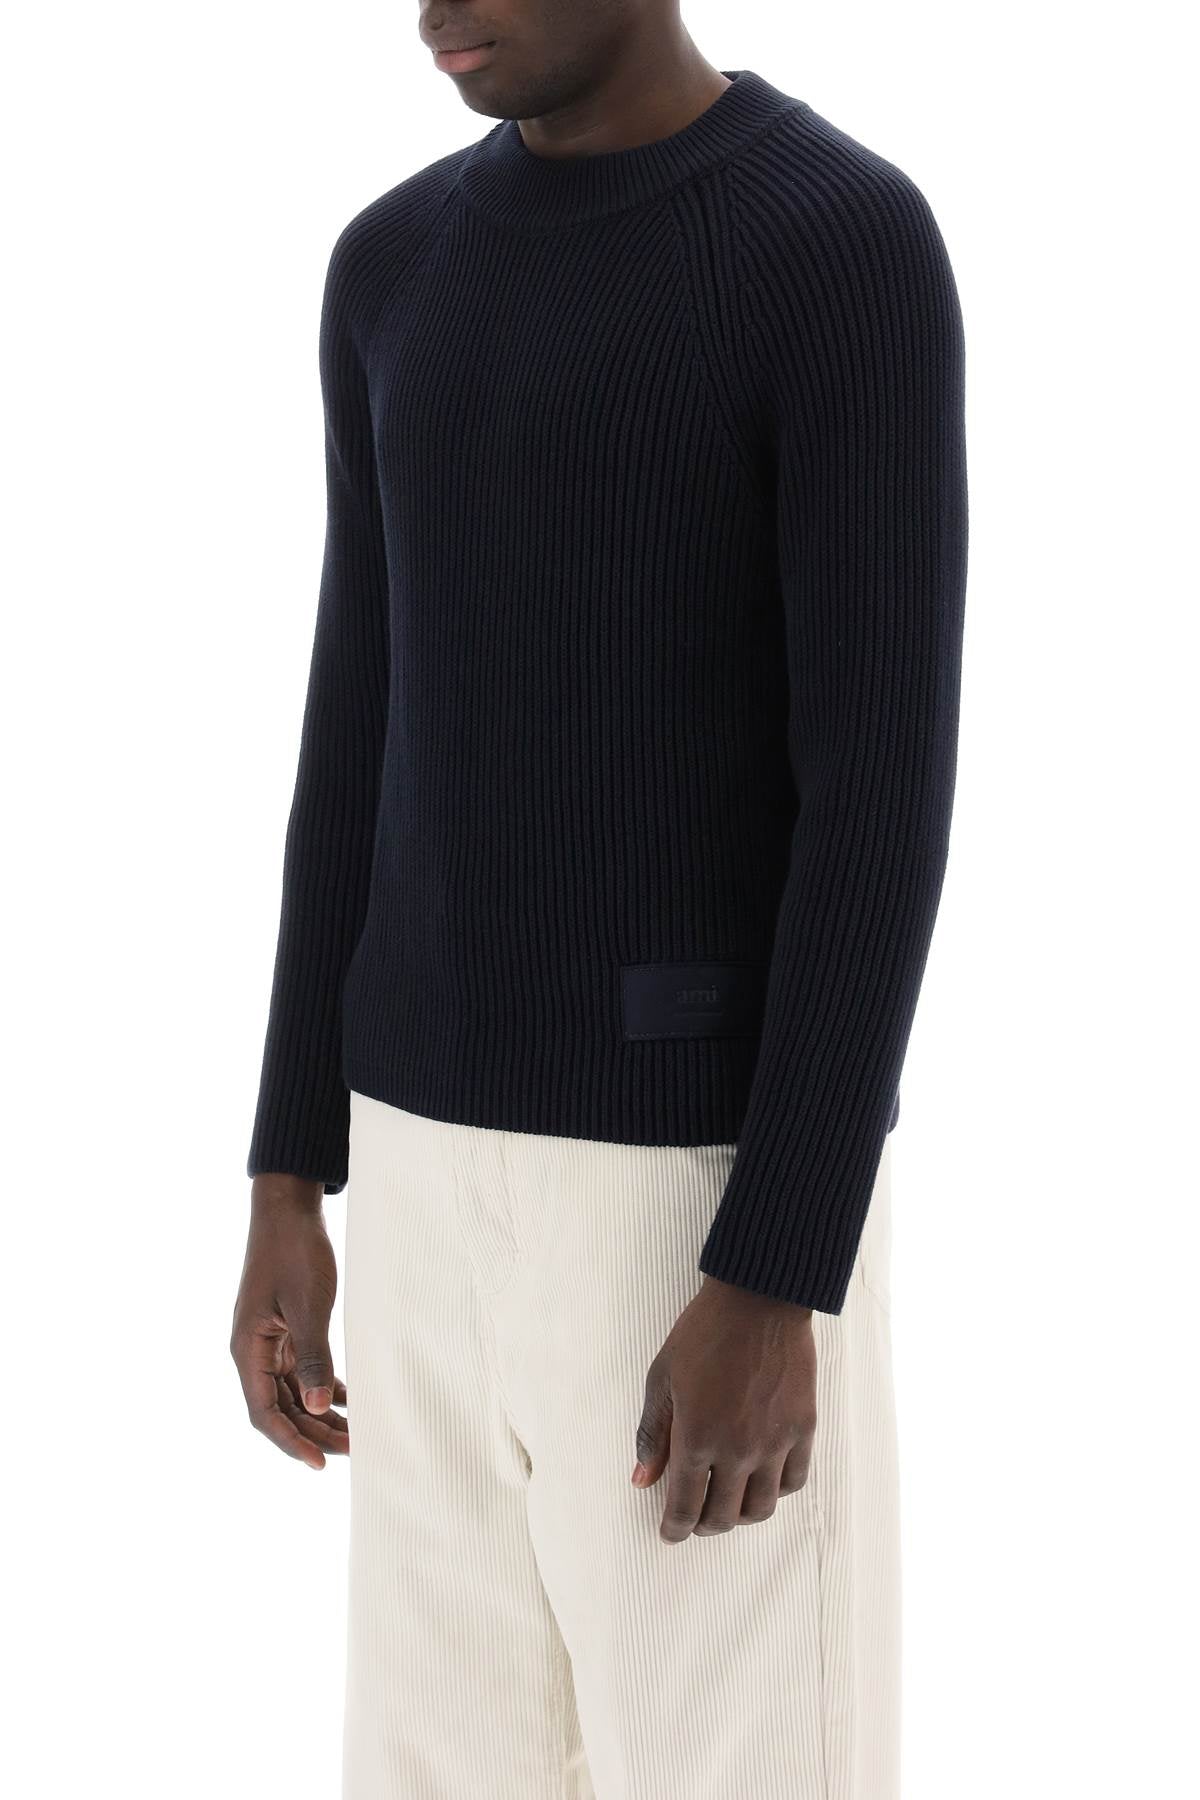 Ami Alexandre Matiussi Cotton-Wool Crewneck Sweater (Size - M)